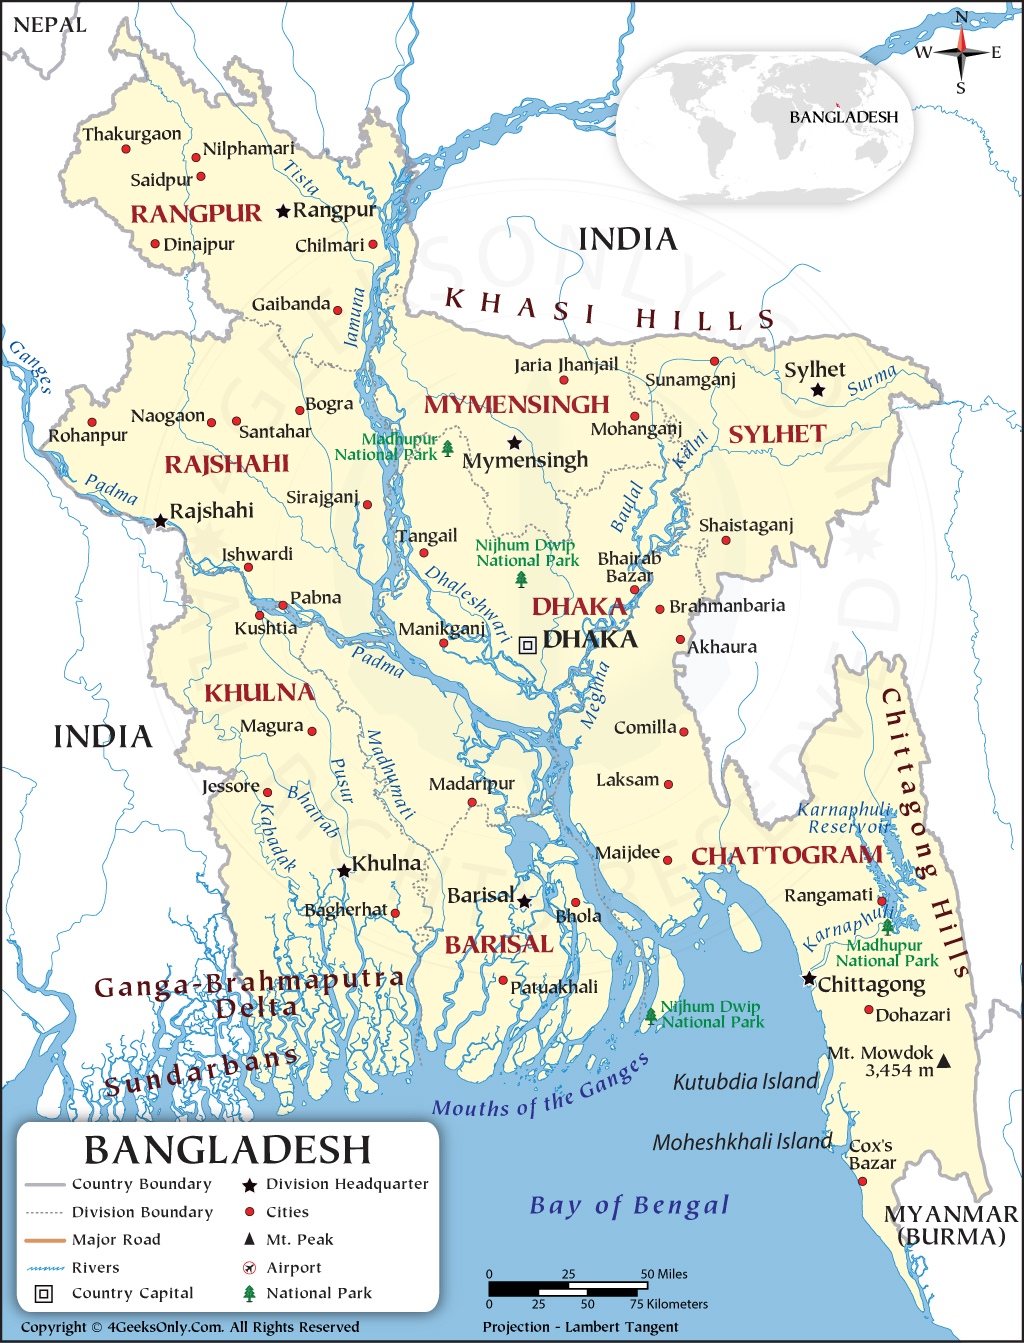 Bangladesh Karta Bangladesh Map Asia Location Geography Worldatlas Maps